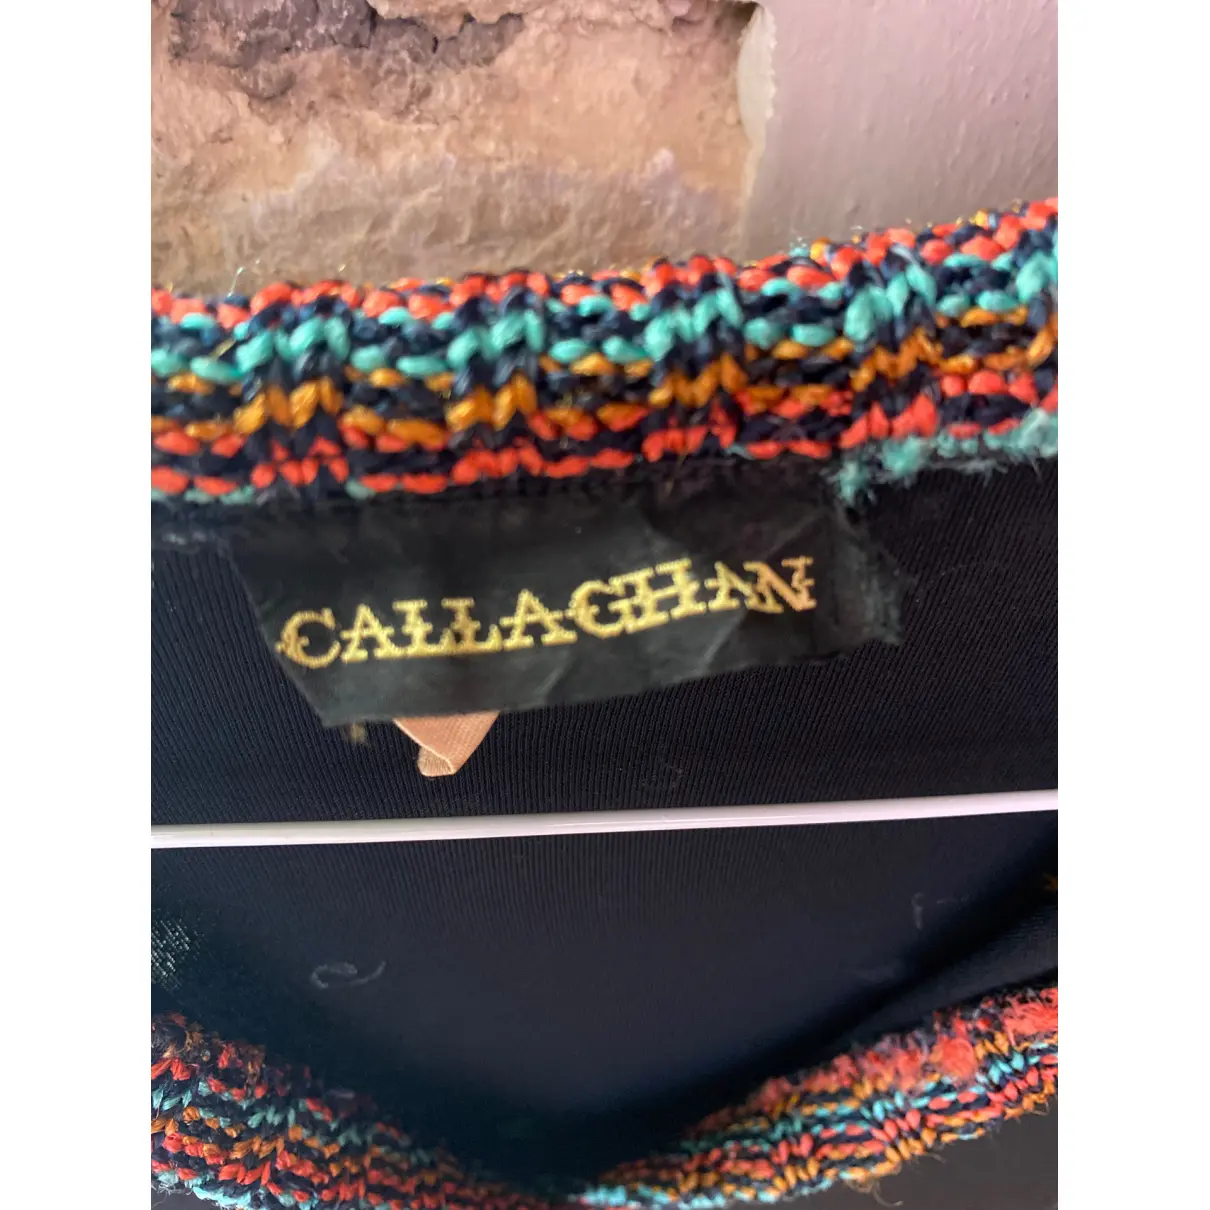 Buy Callaghan Mid-length dress online - Vintage